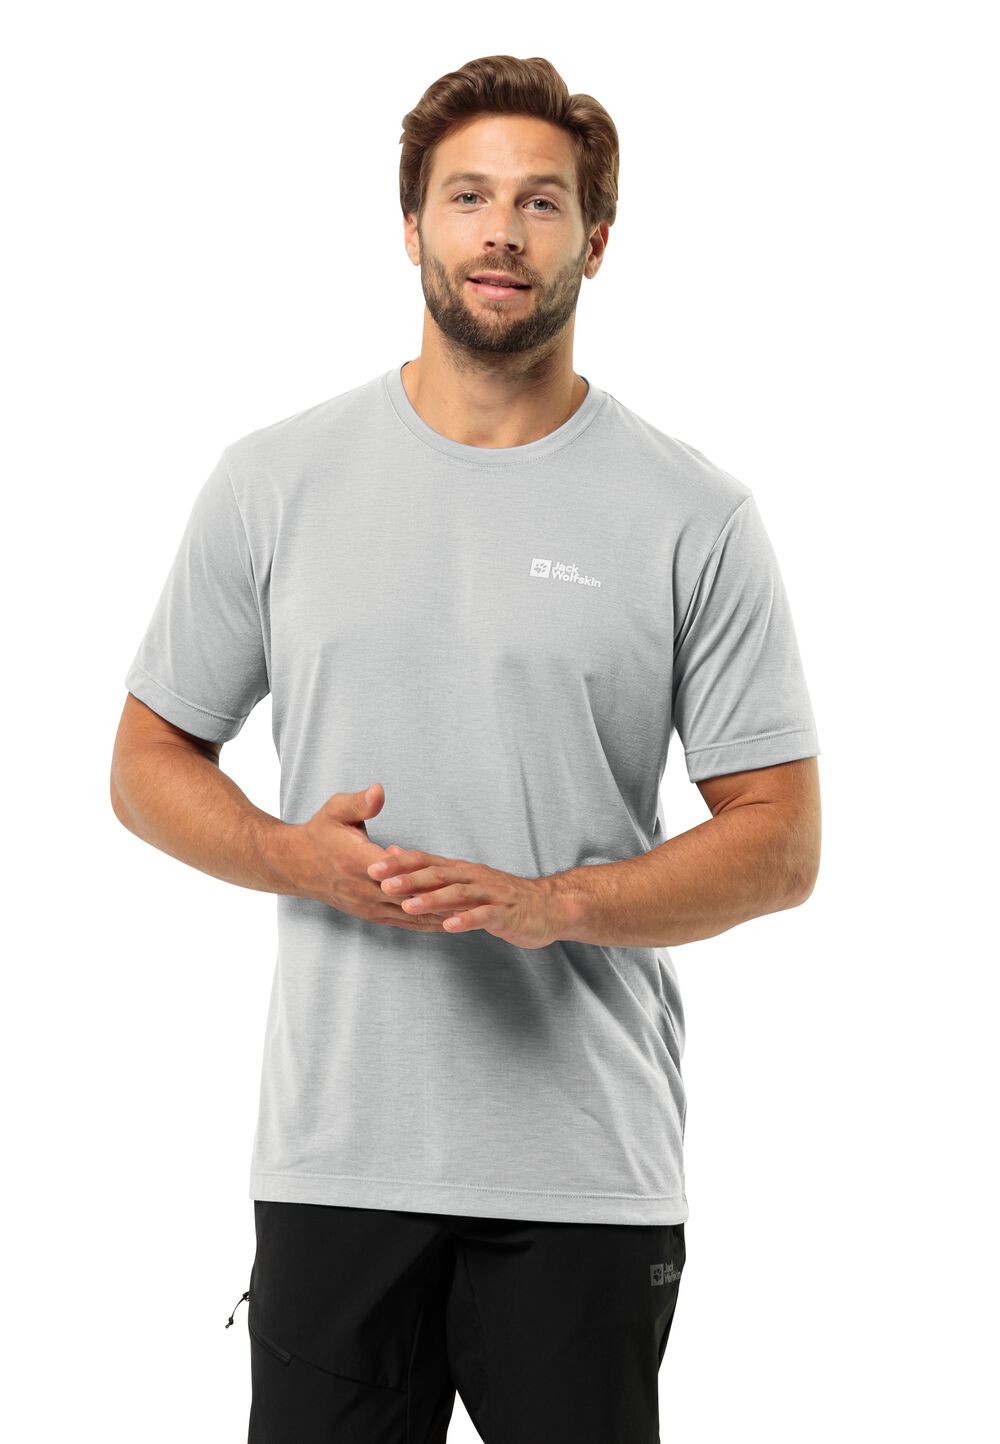 Jack Wolfskin Vonnan S S T-Shirt Men Functioneel shirt Heren M grijs cool grey